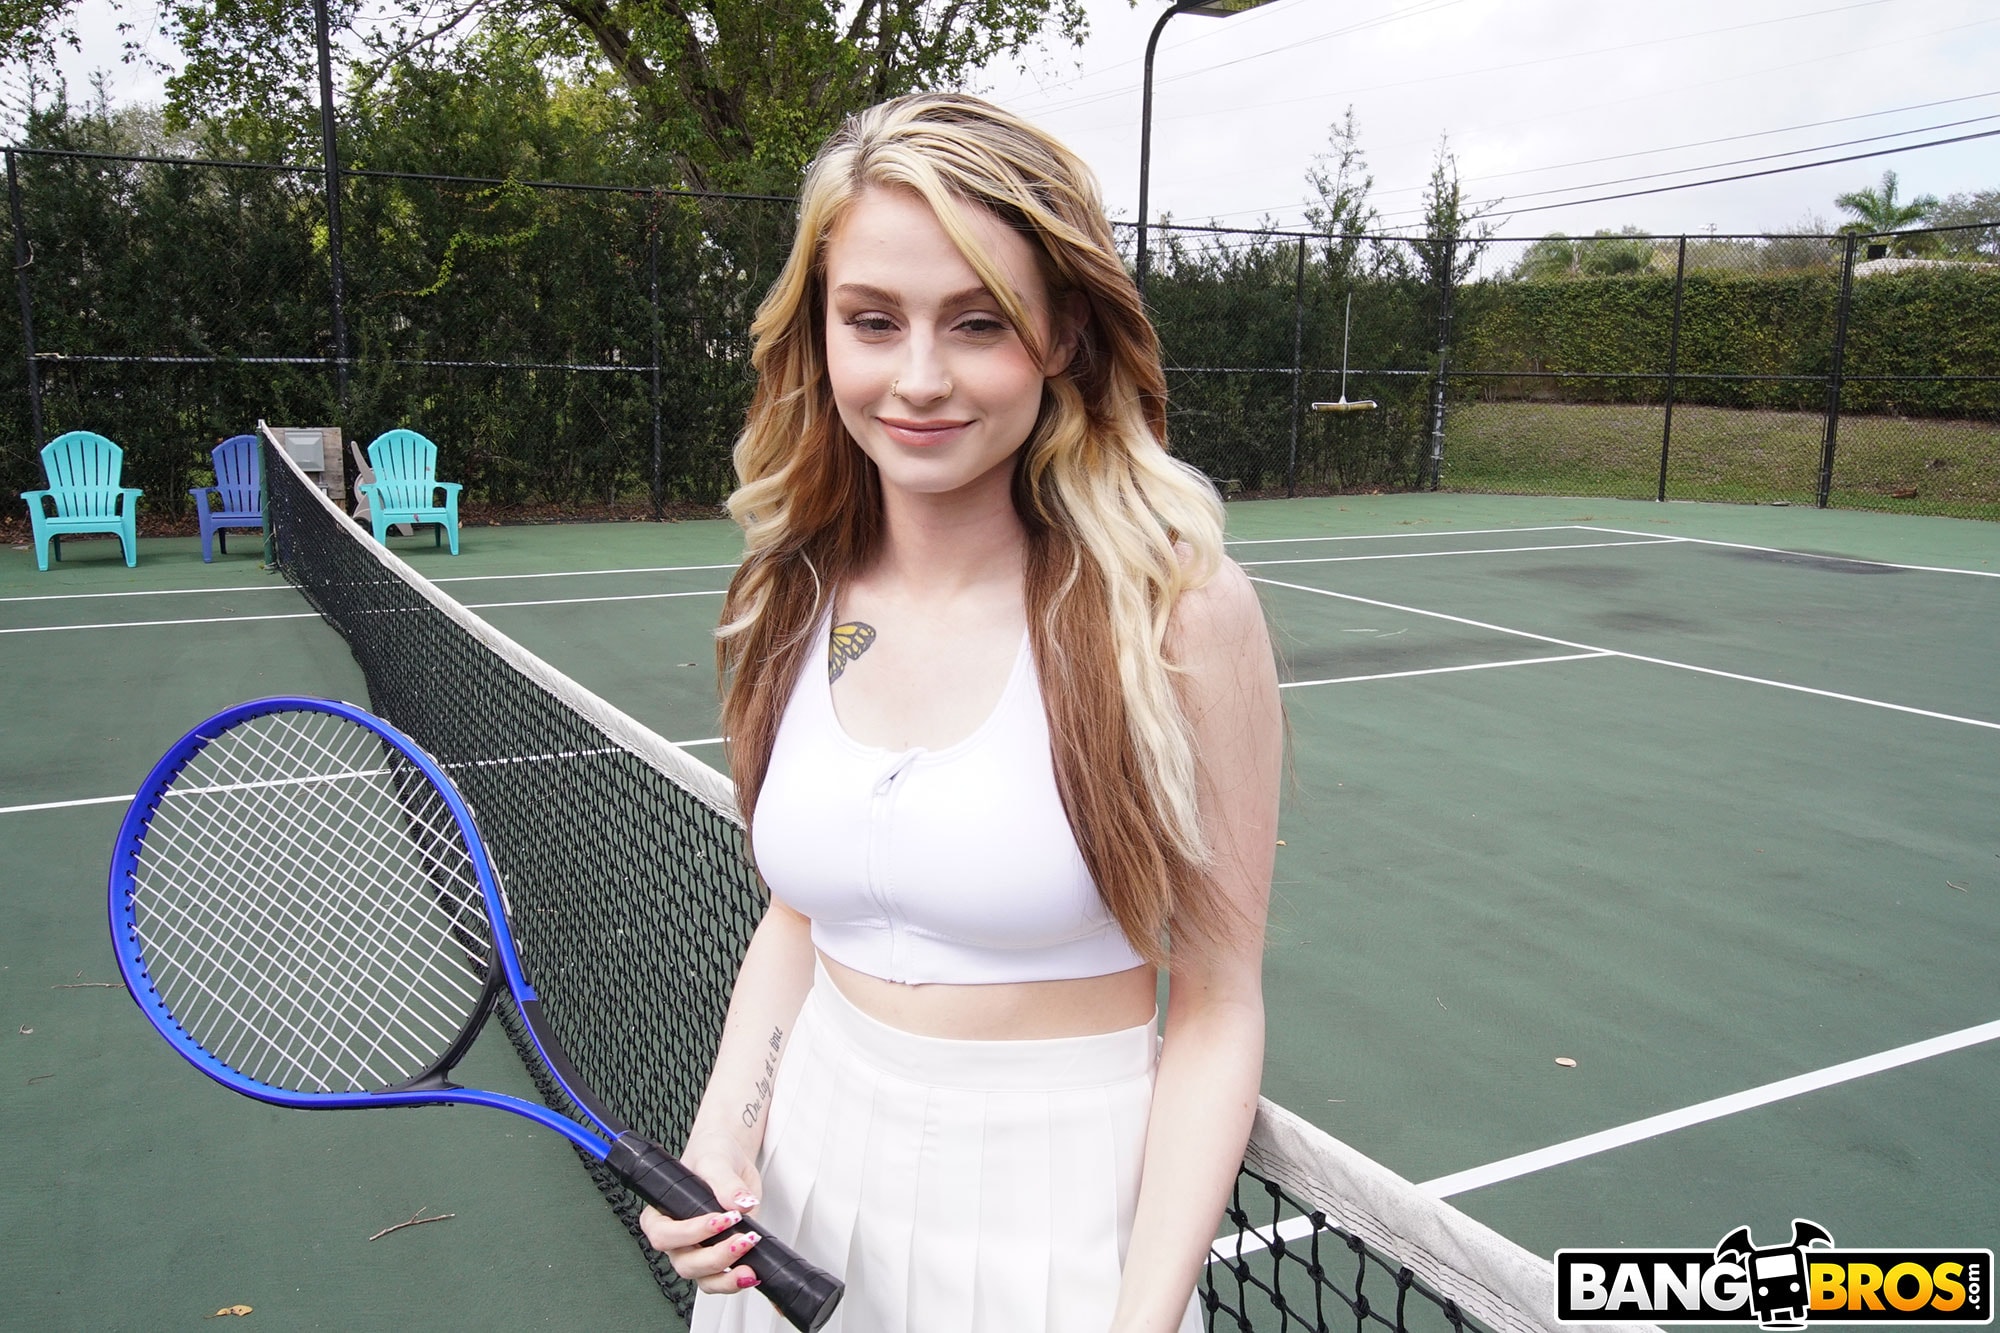 Bangbros 'Tennis Fuck Session' starring Kimberly Snow (Photo 1)